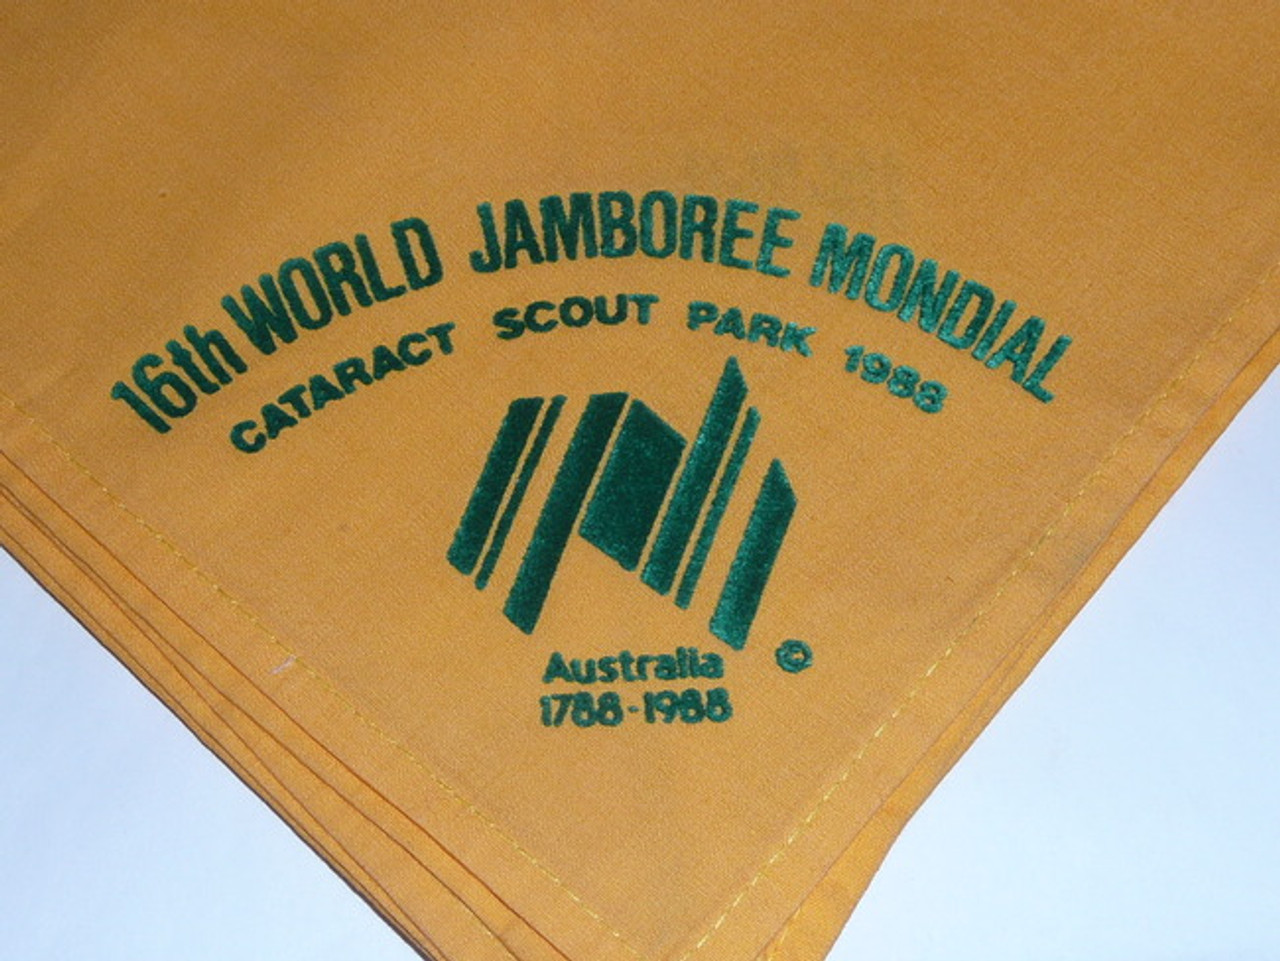 1987-1988 Boy Scout World Jamboree Official Neckerchief, Yellow